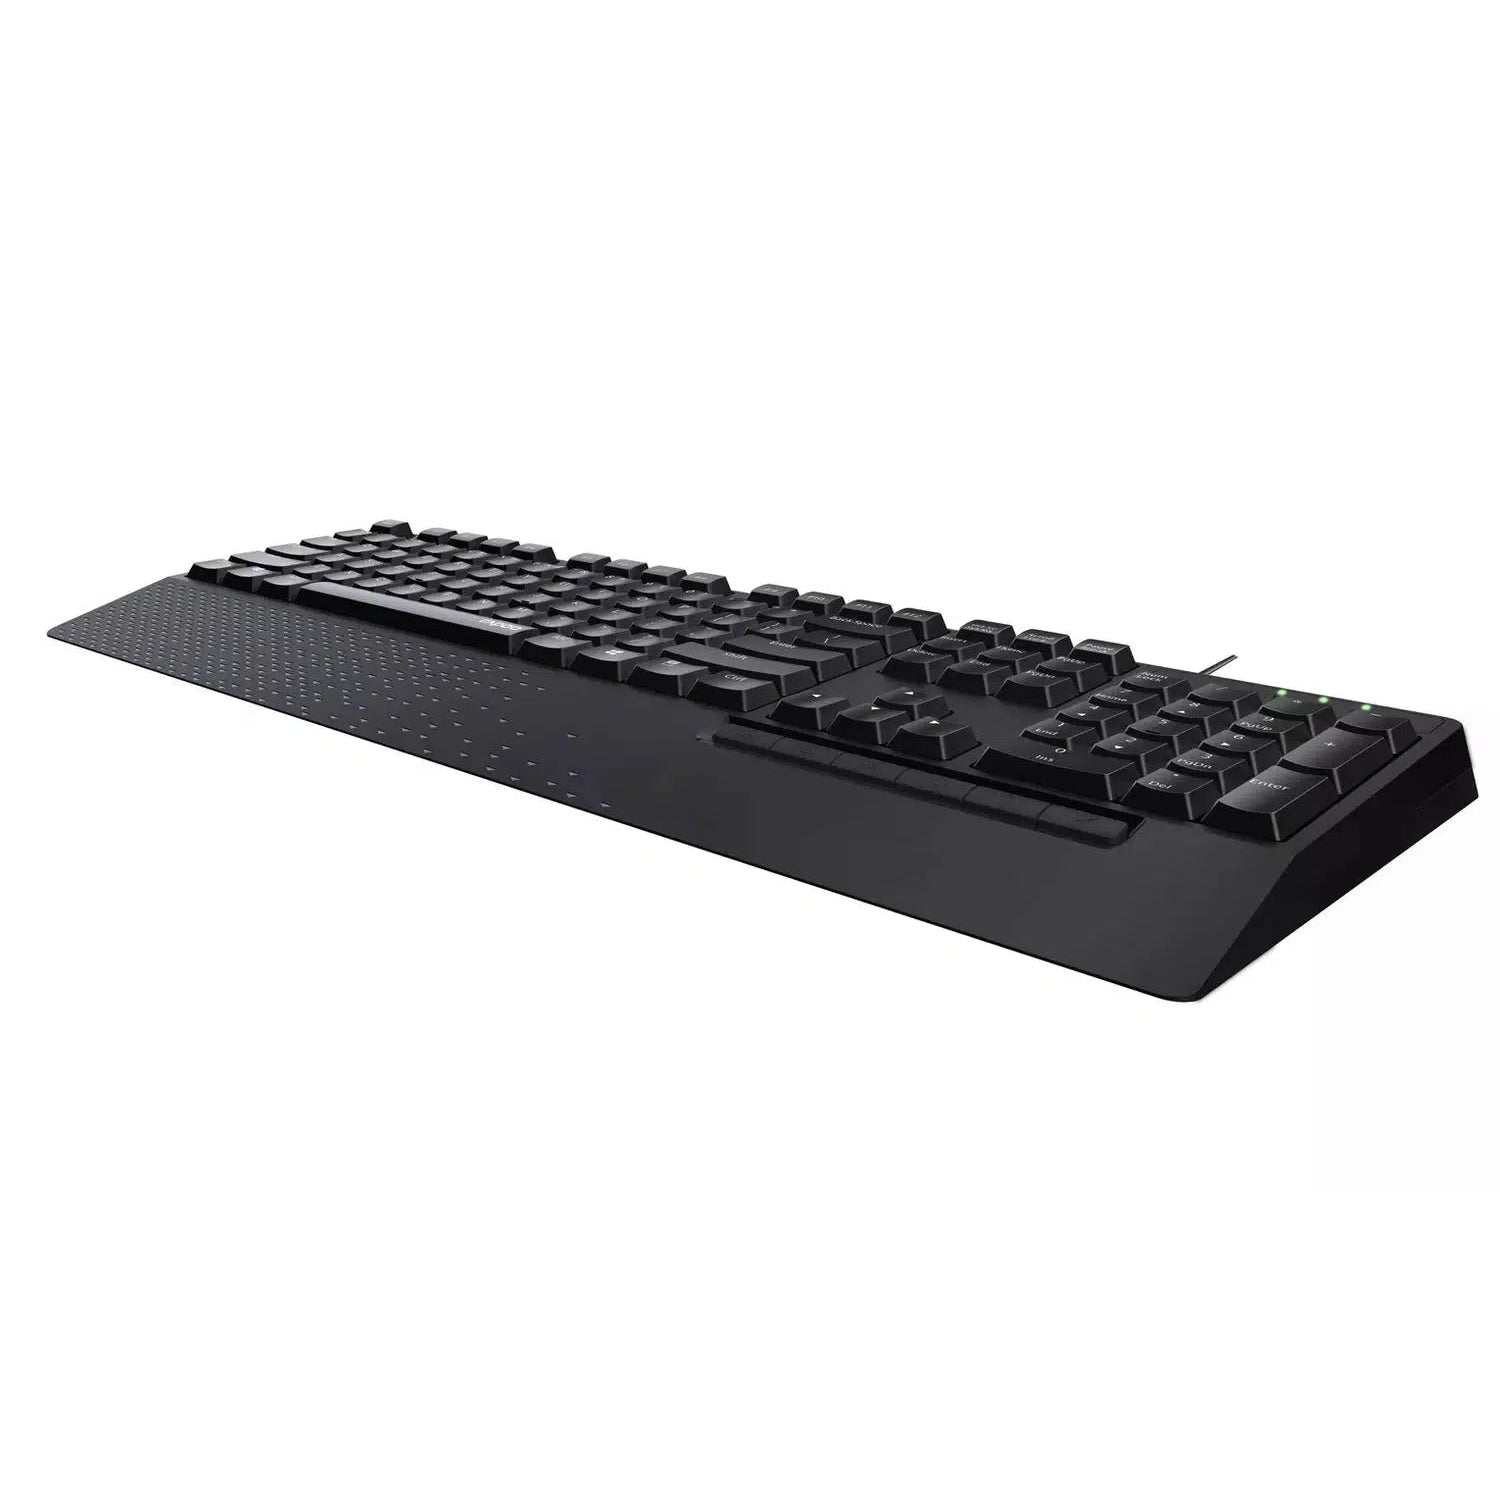 Rapoo NK2000 Spill Resistant Wired Keyboard, Black - Refurbished Excellent